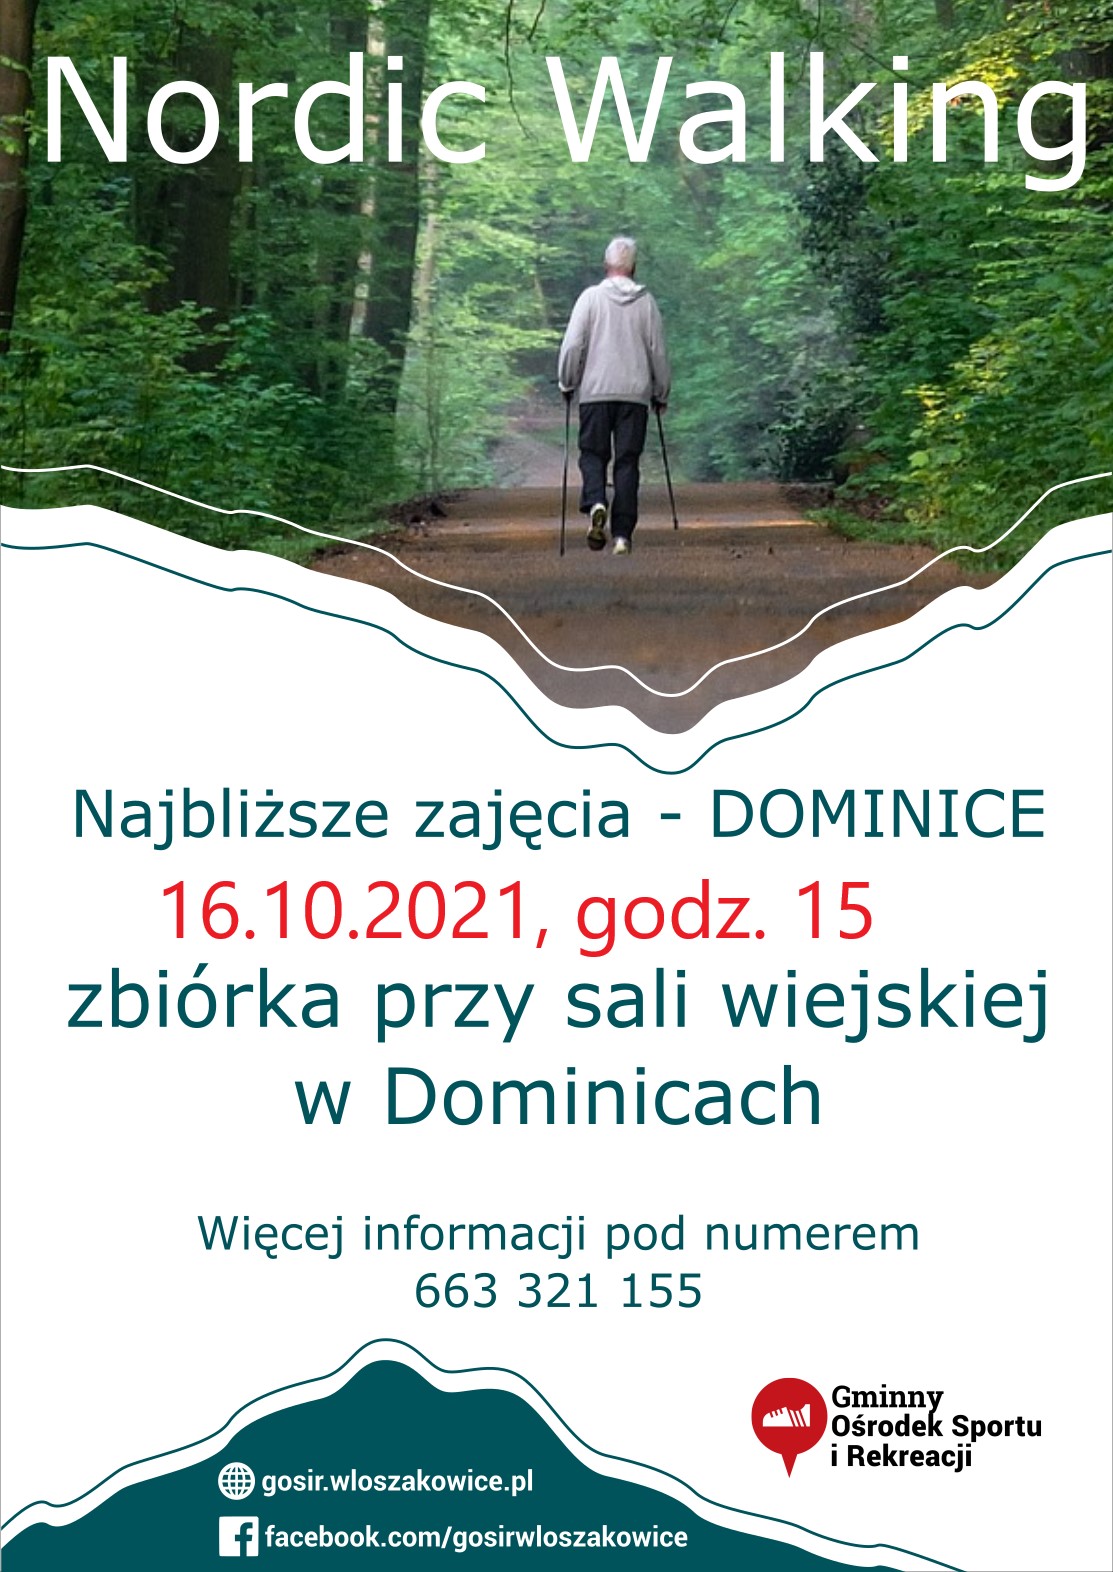 dominice_1.jpg - 348,61 kB